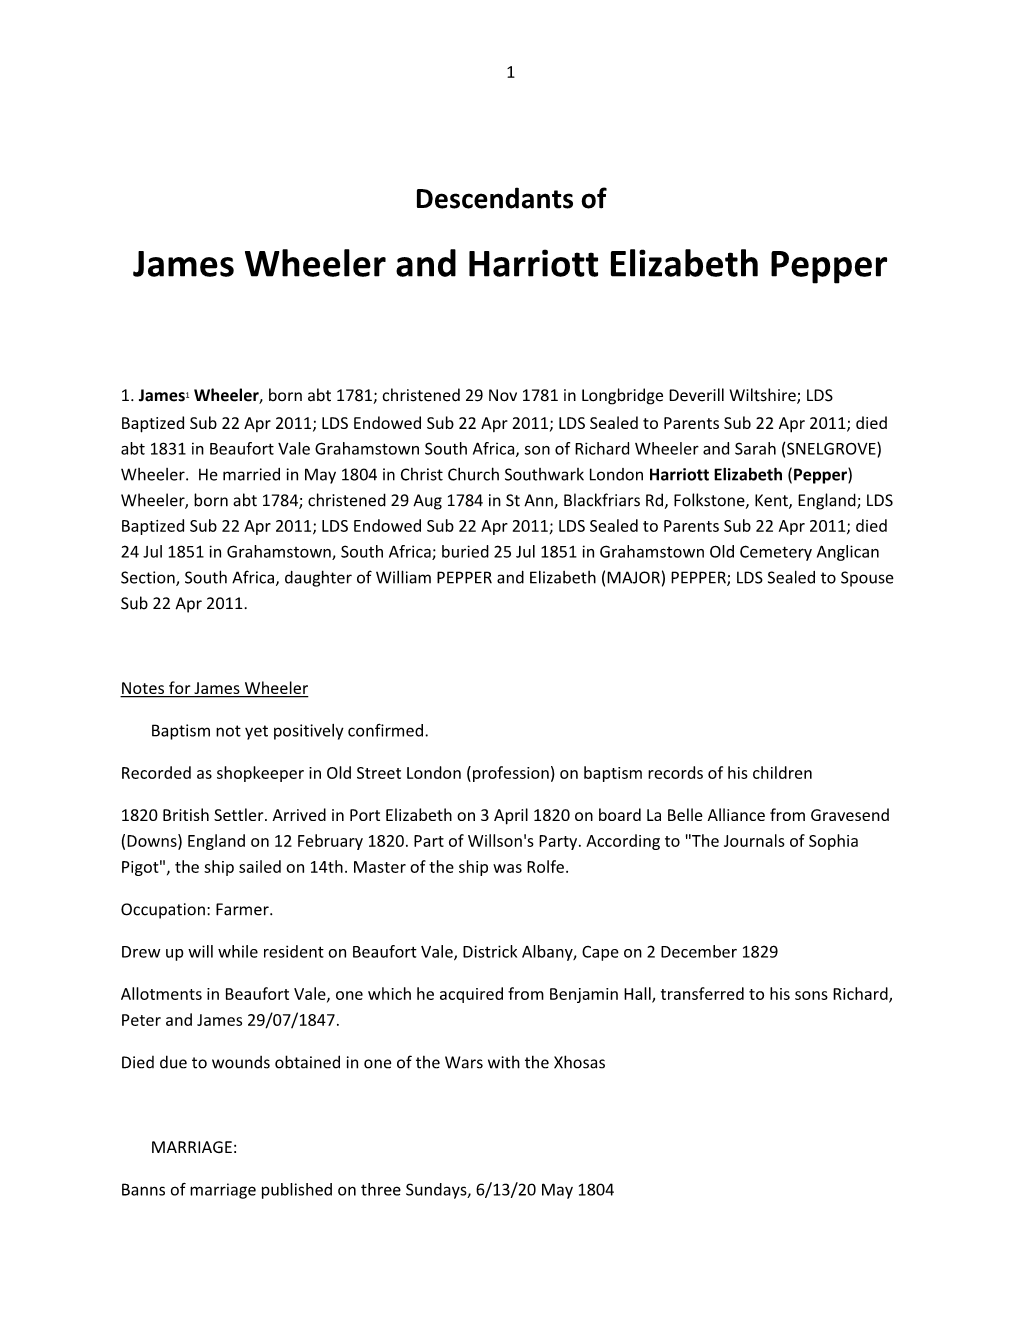 James Wheeler and Harriott Elizabeth Pepper